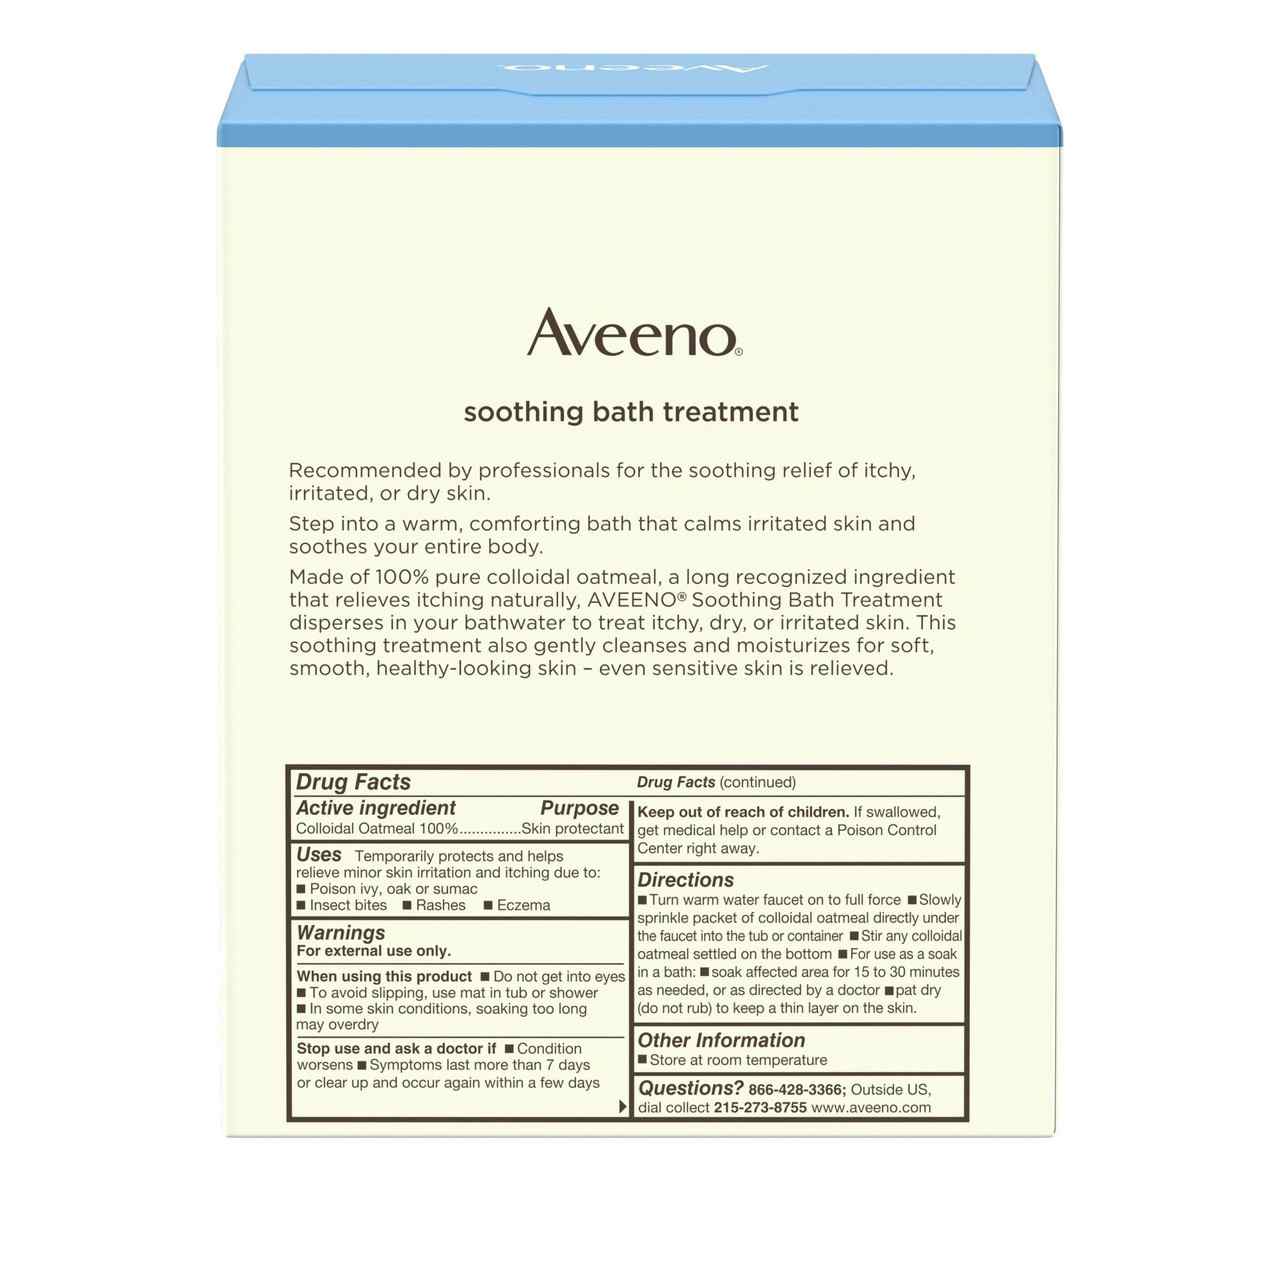 Aveeno Soothing Oatmeal Bath Treatment, 1.5 oz. Packet, back